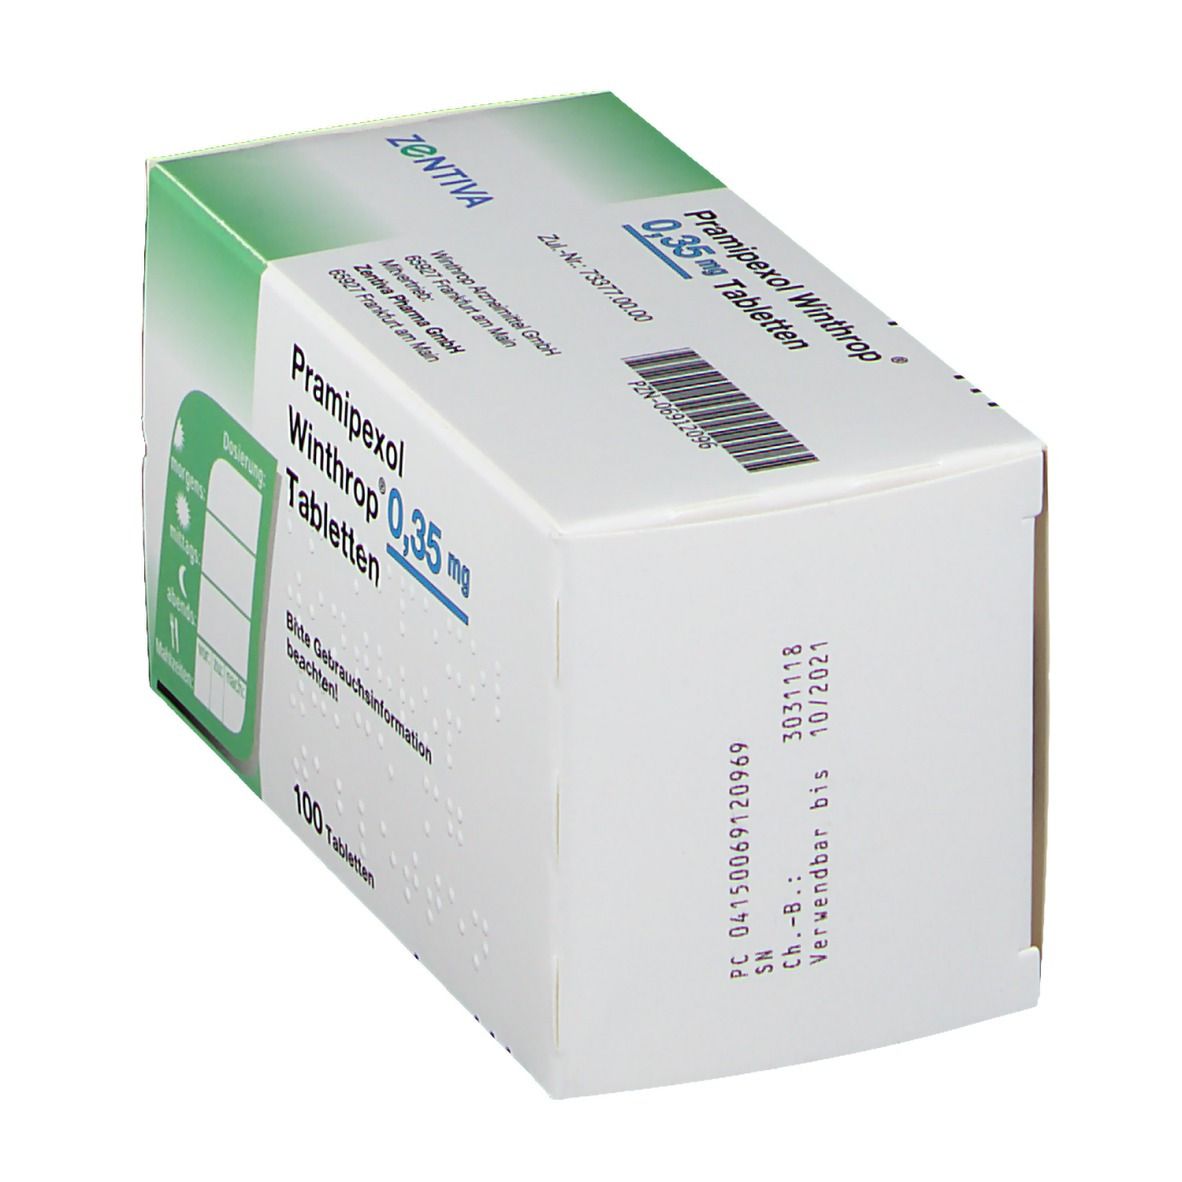 Pramipexol Winthrop® 0,35 mg